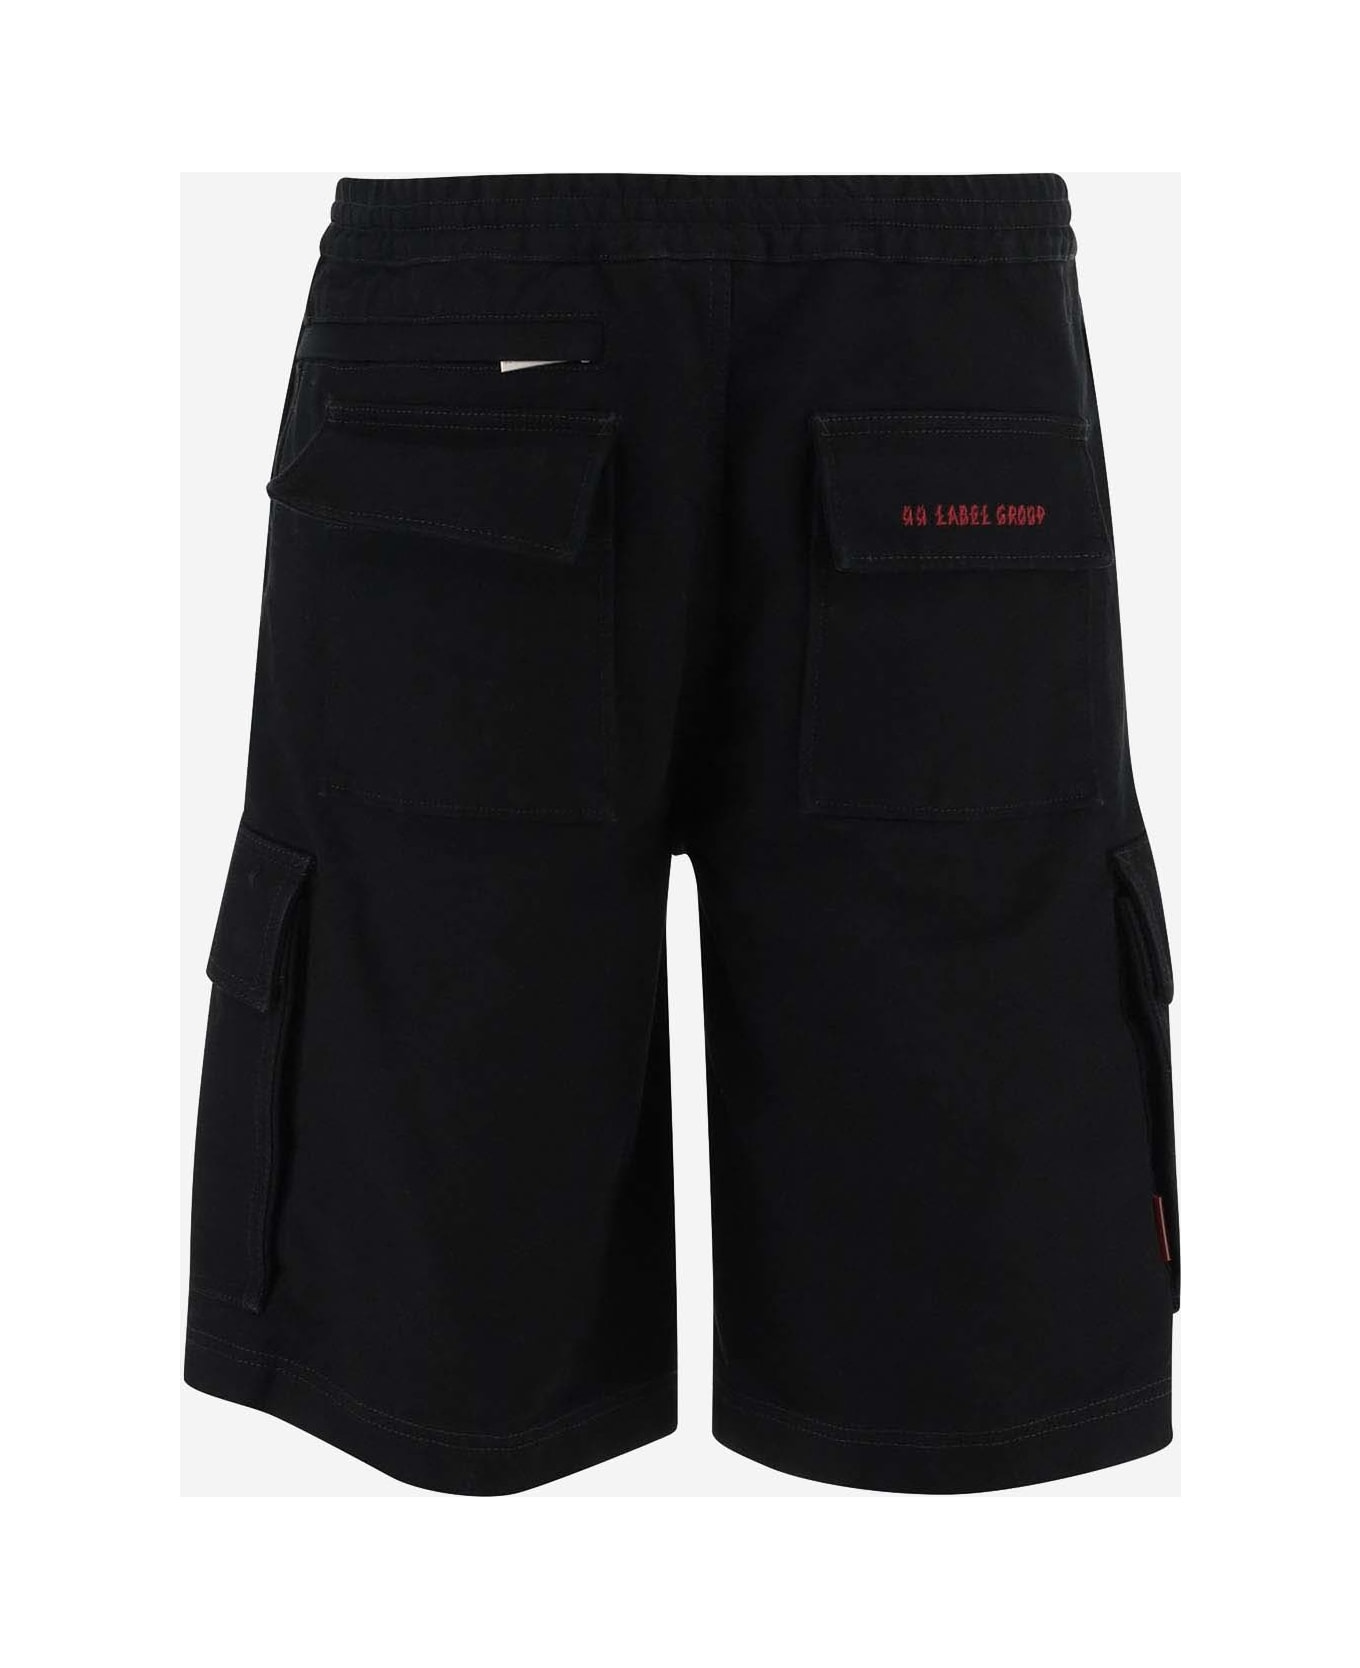 44 Label Group Cotton Bermuda Shorts With Logo - Black ショートパンツ